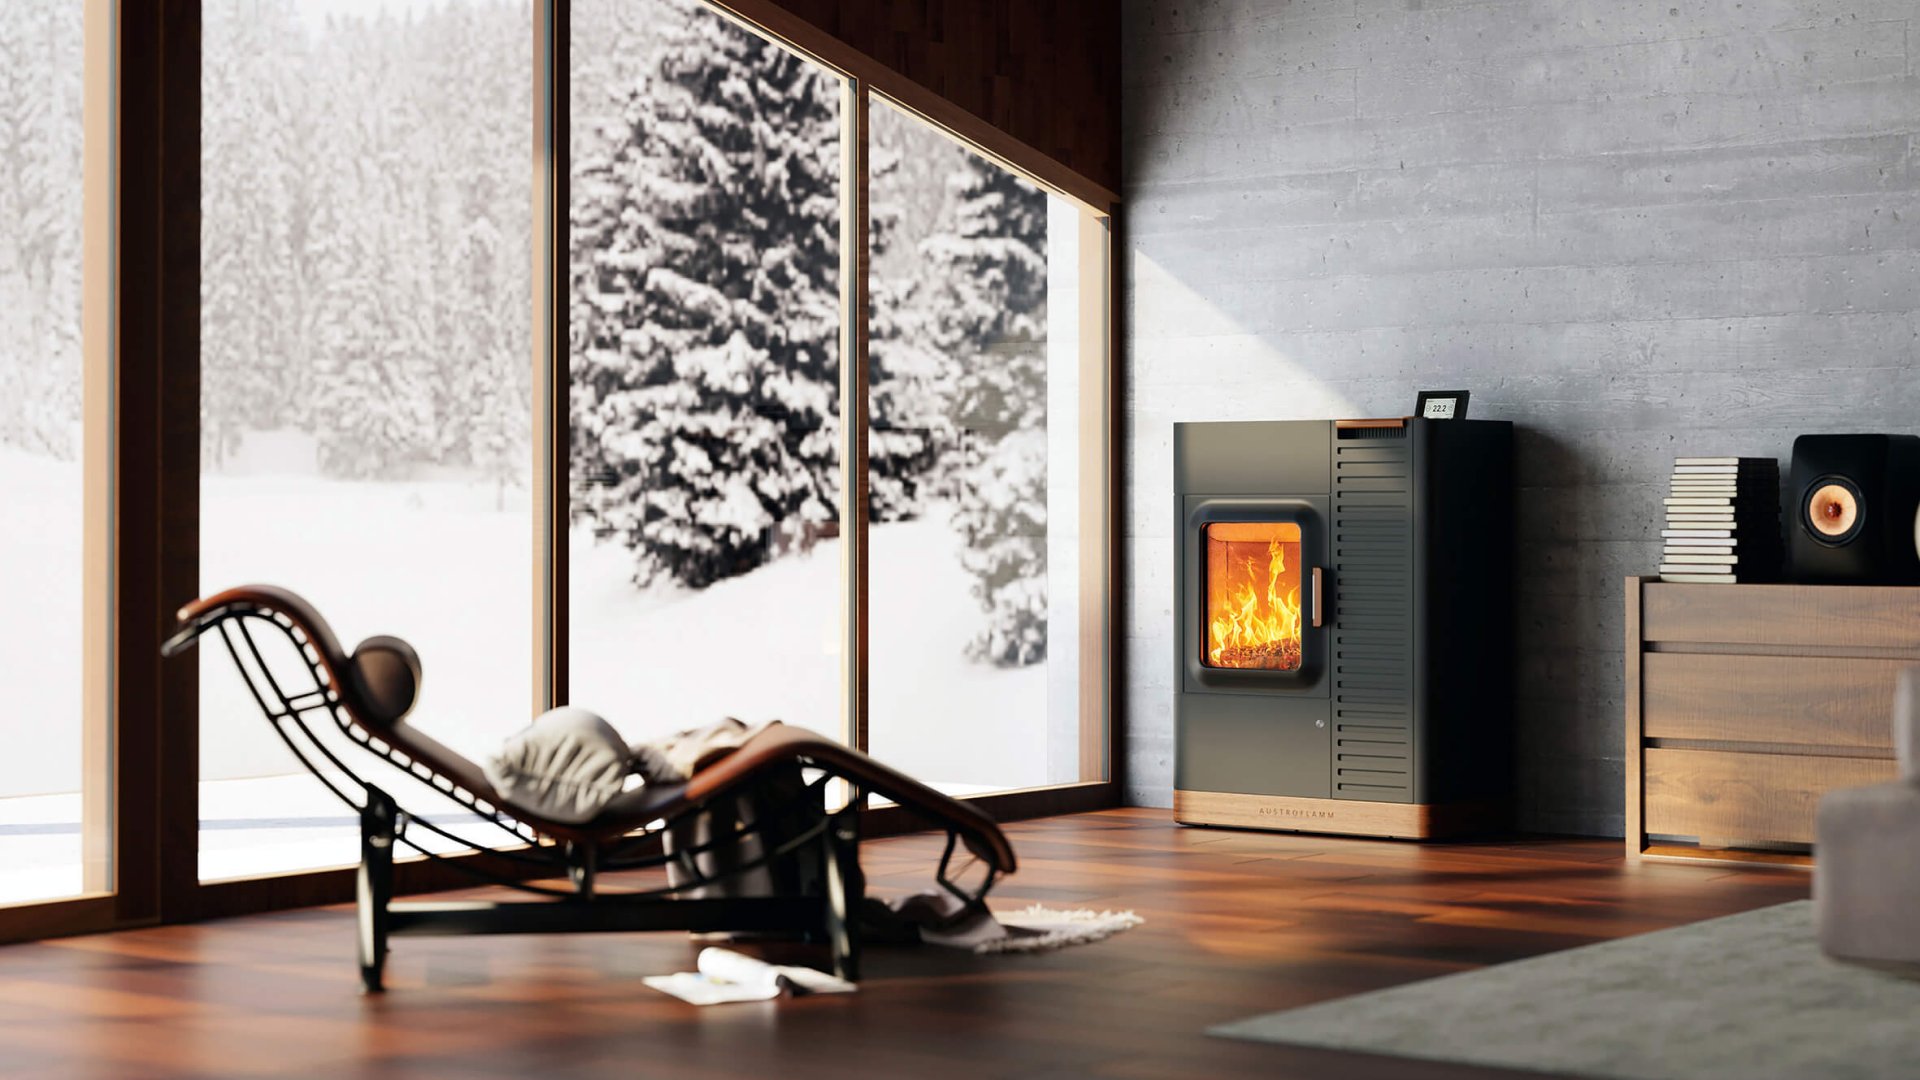 Mo Duo hybrid stove ambiance photo winter